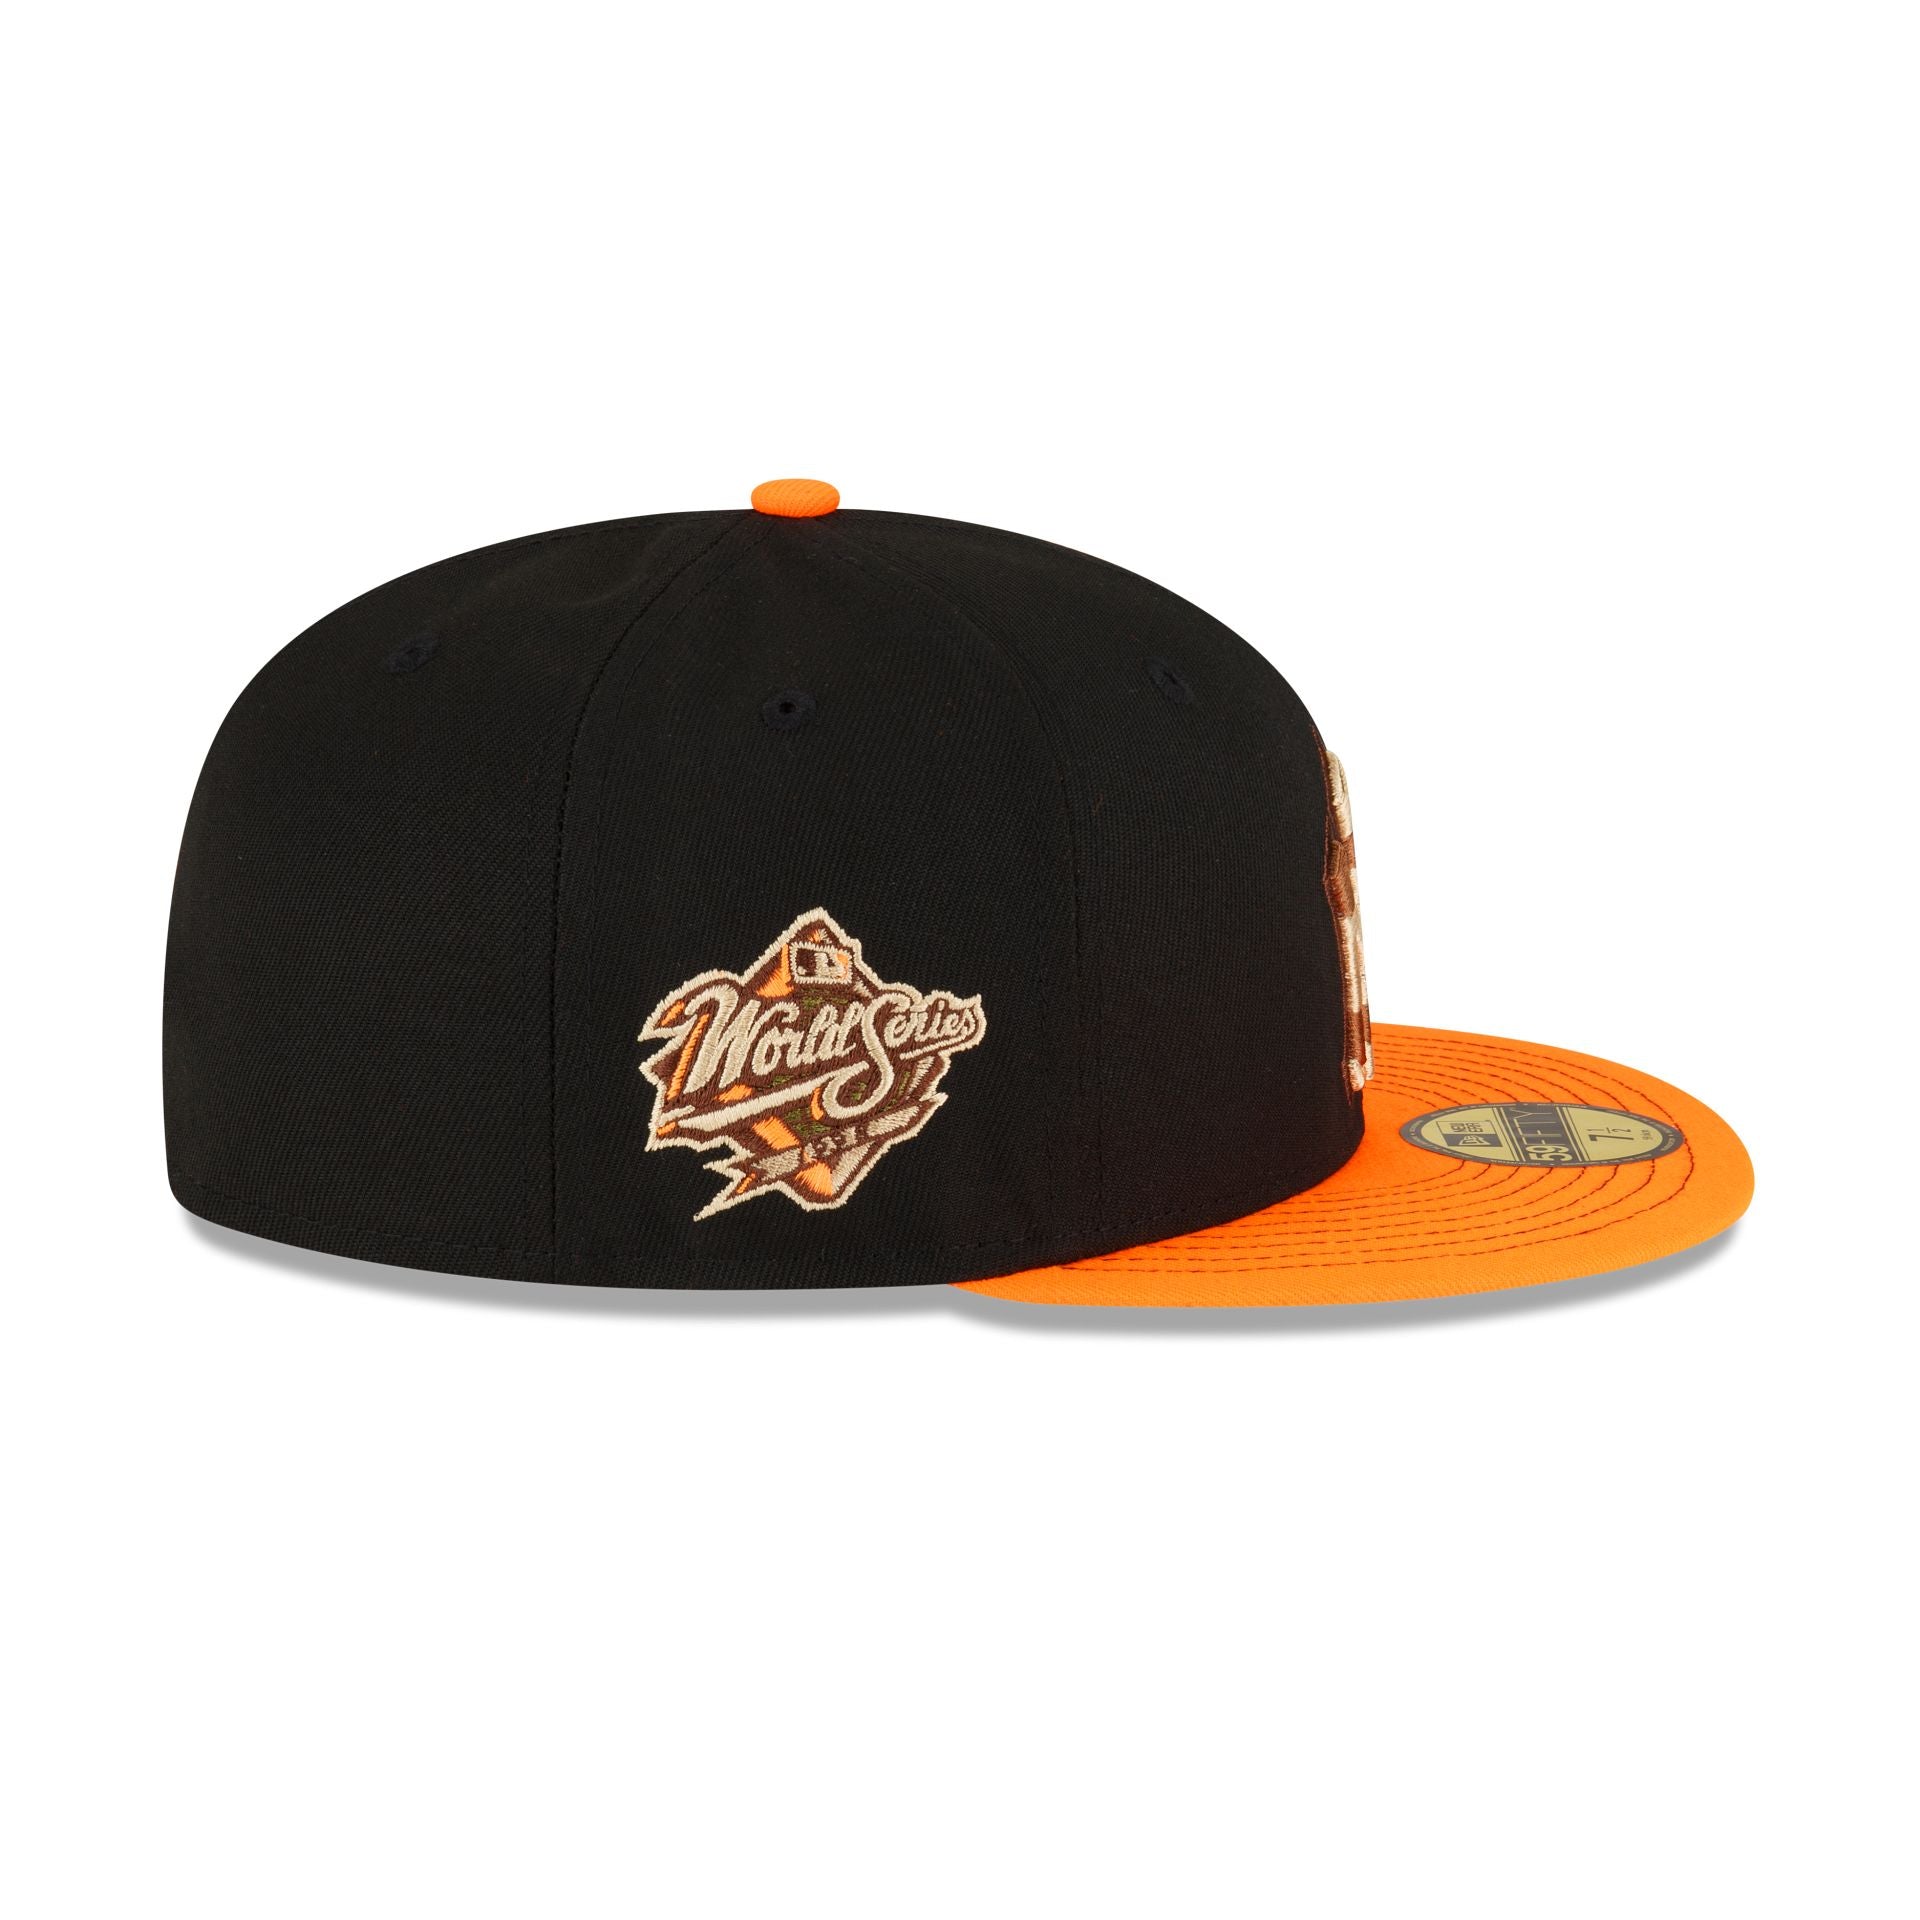 Yankees Hat 59FIFTY Cap – Era Visor York Caps New Fitted Orange Just New